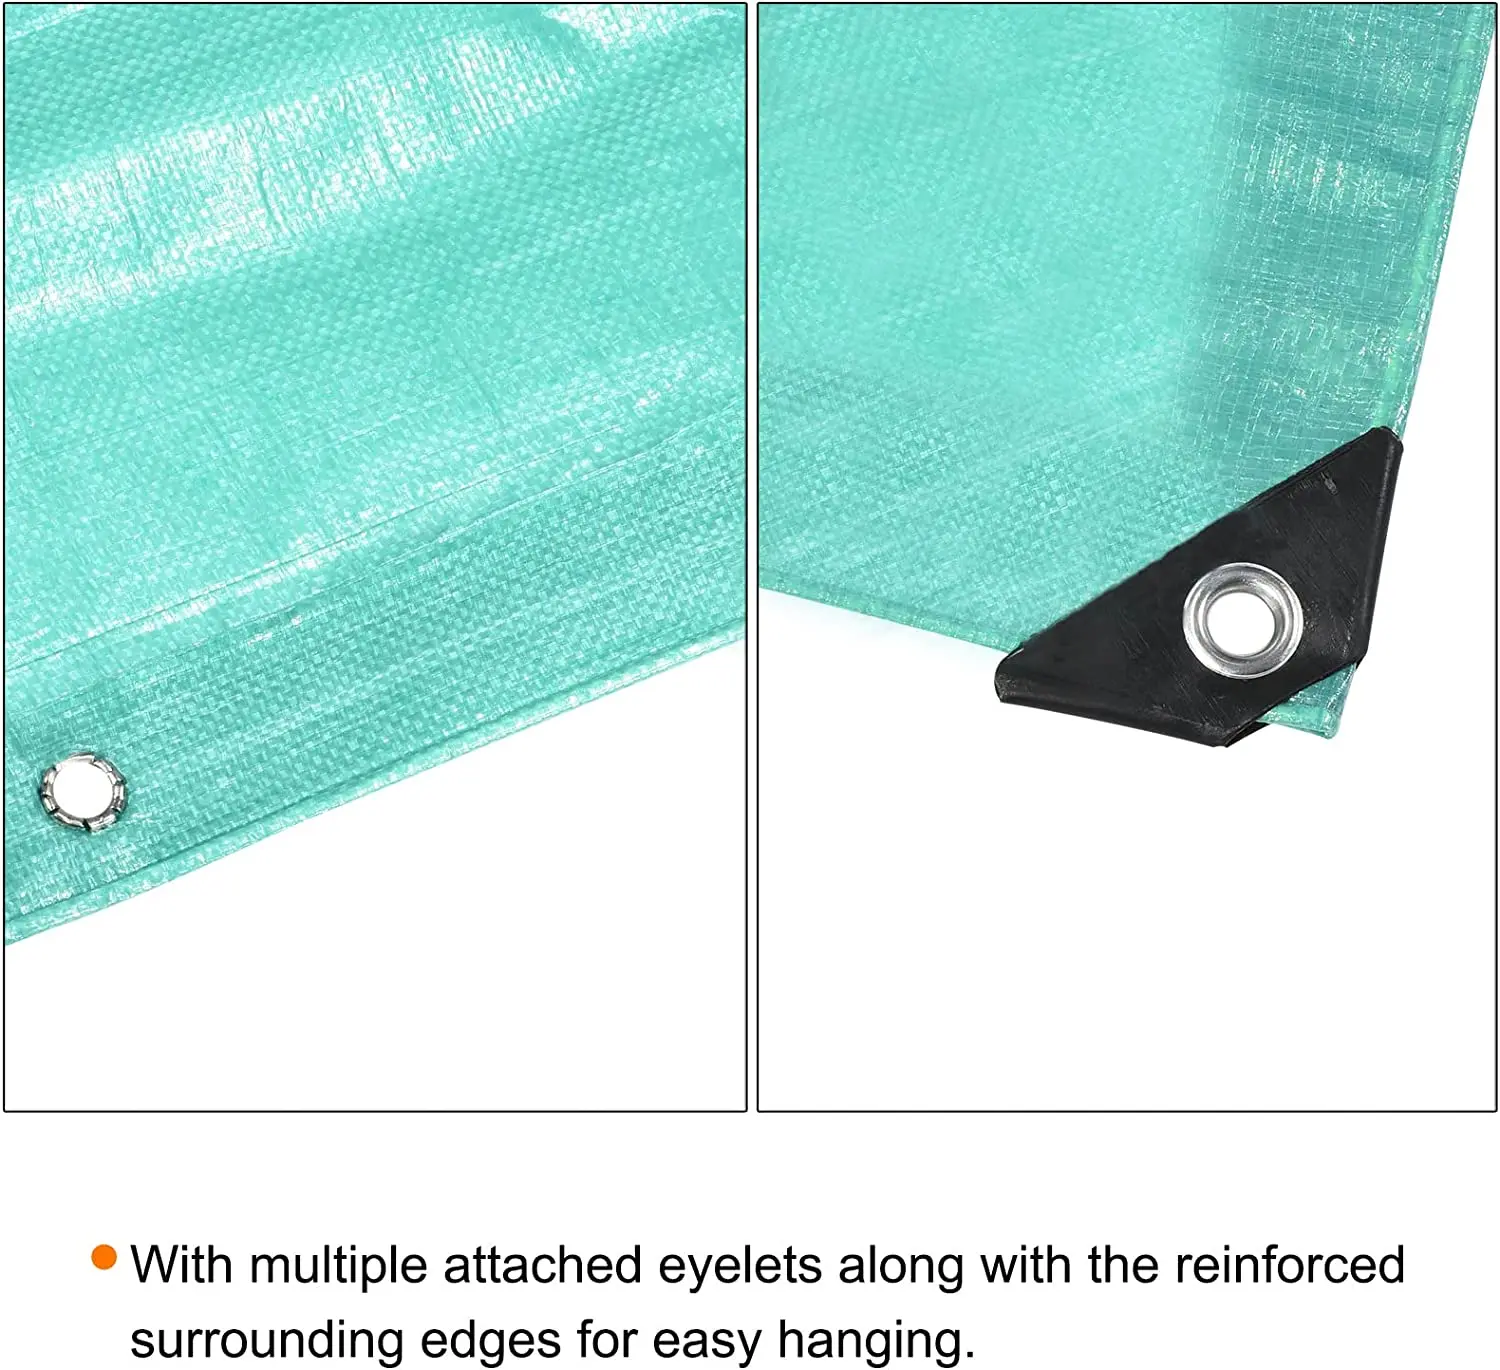 Factory Price Reinforced Woven Fabric Plastic PE Tarpaulin Sheet Poly Tarps